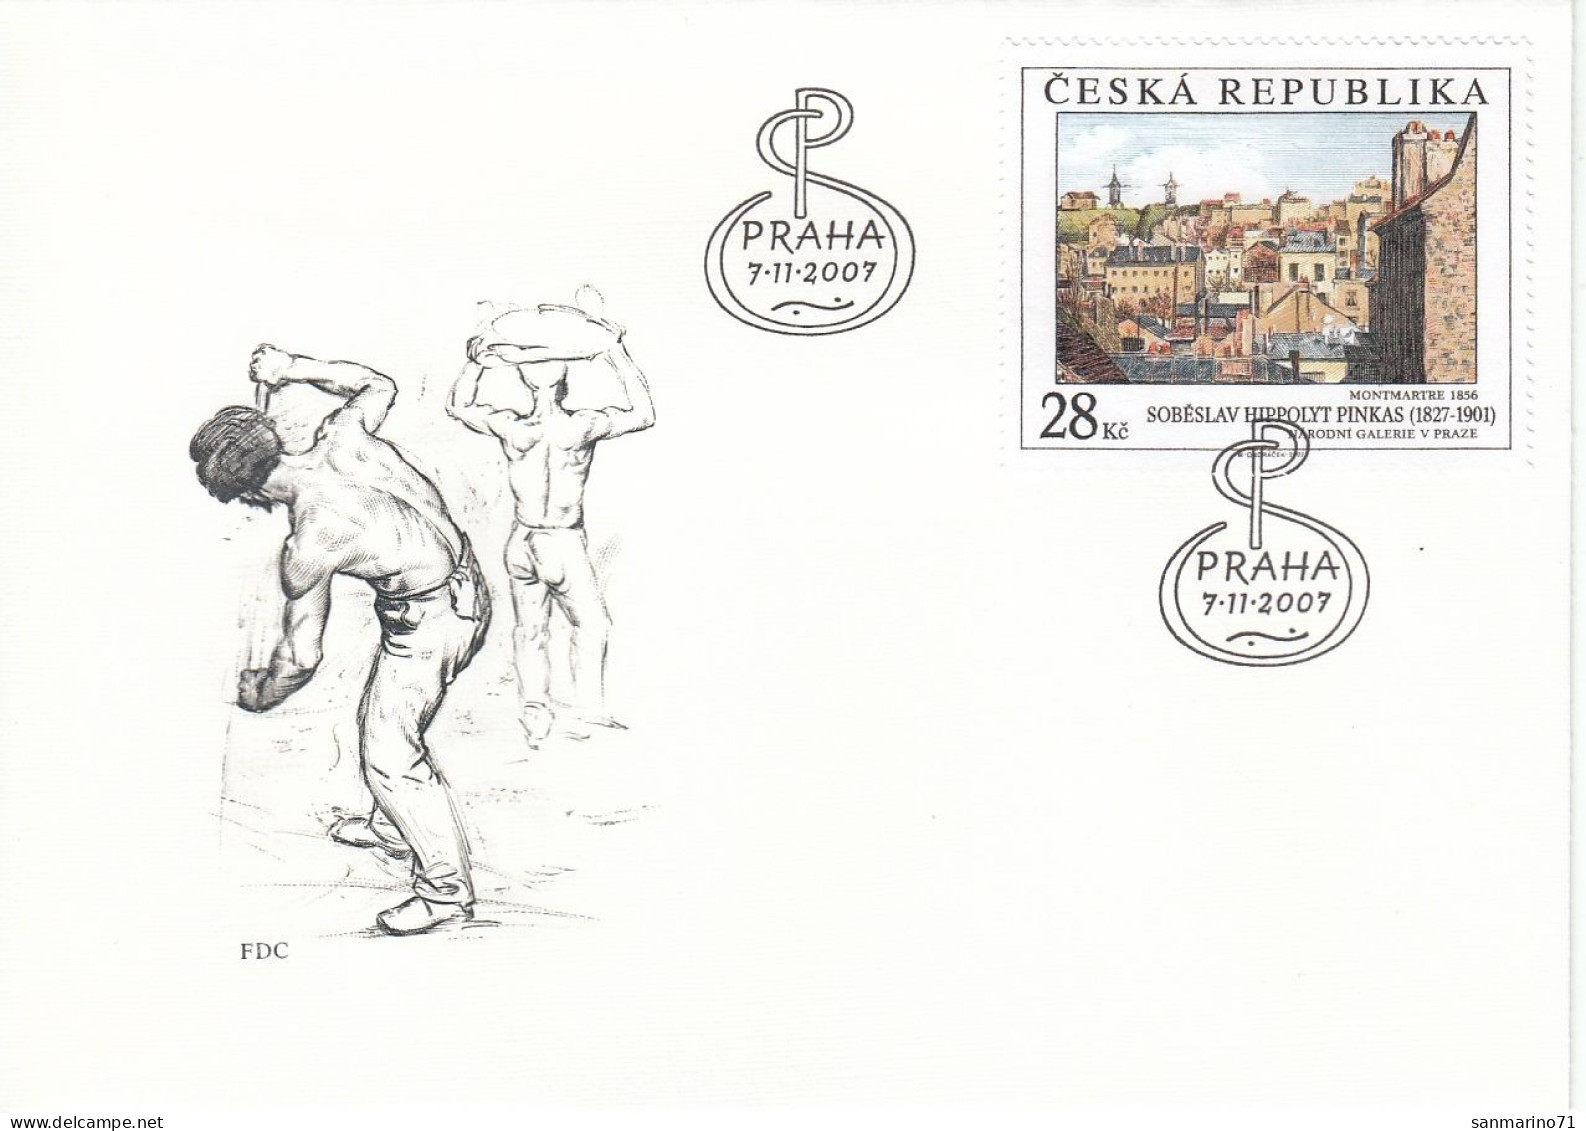 FDC CZECH REPUBLIC 534 - FDC